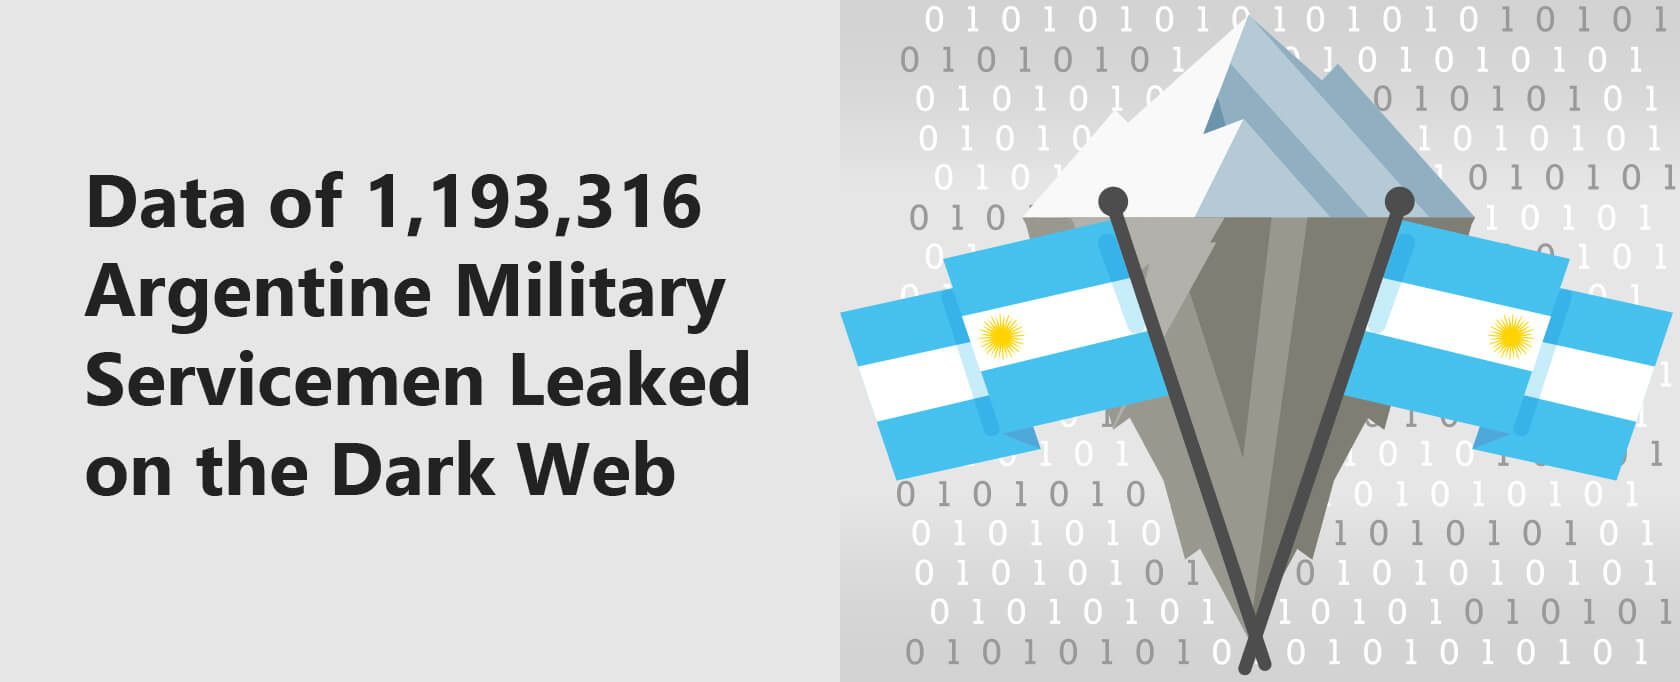 Sensitive Data of 1,193,316 Argentine Military Servicemen Leaked on the Dark Web